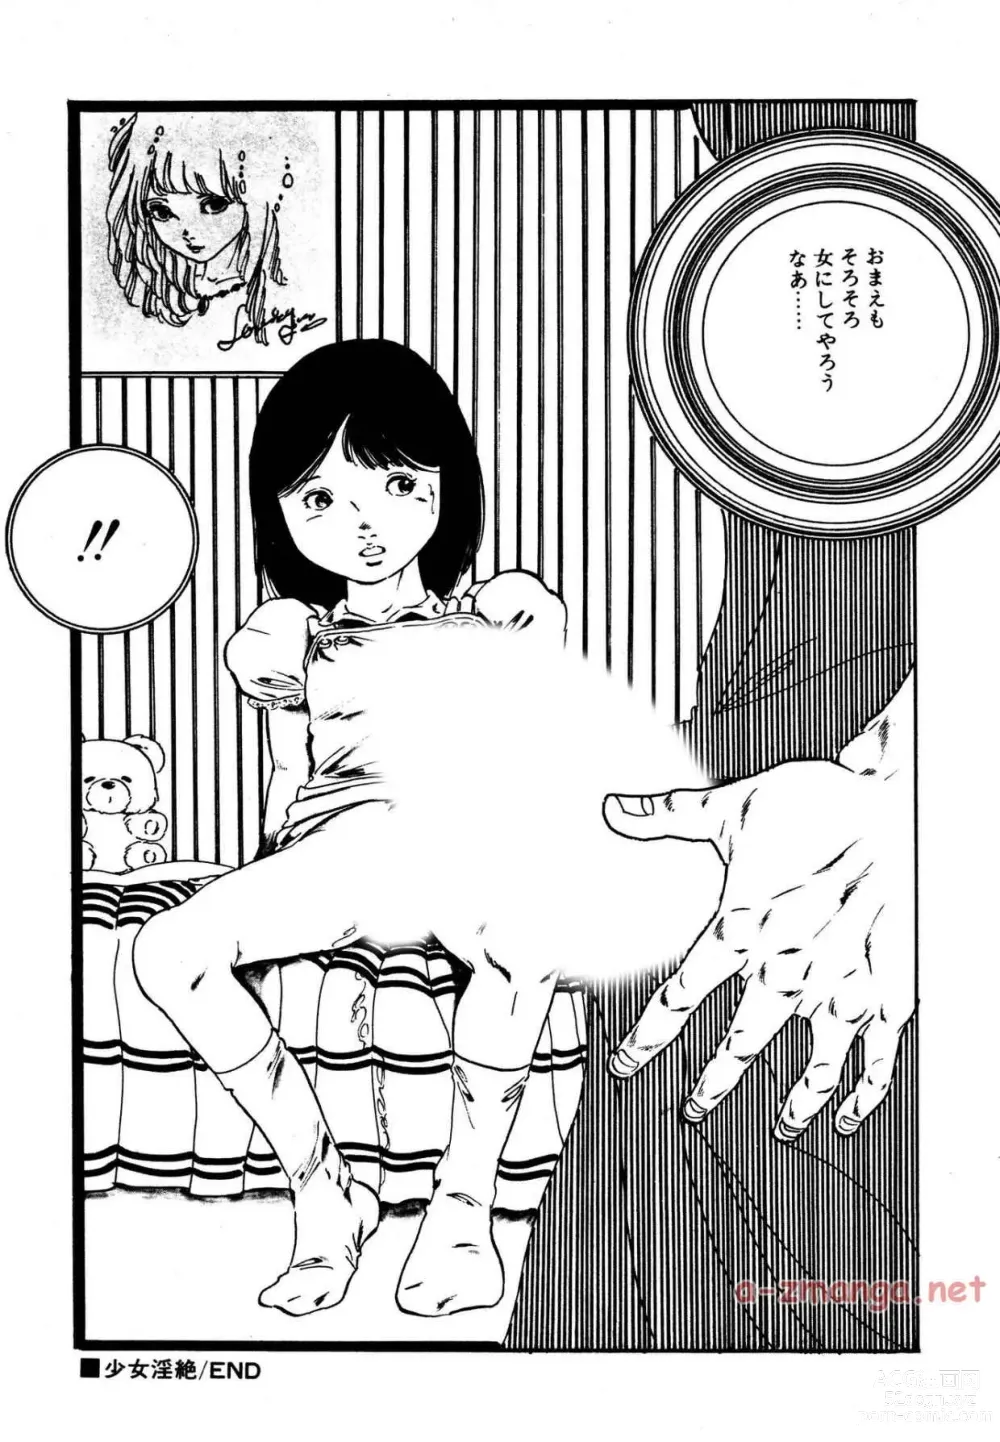 Page 194 of manga Dreaming fairy